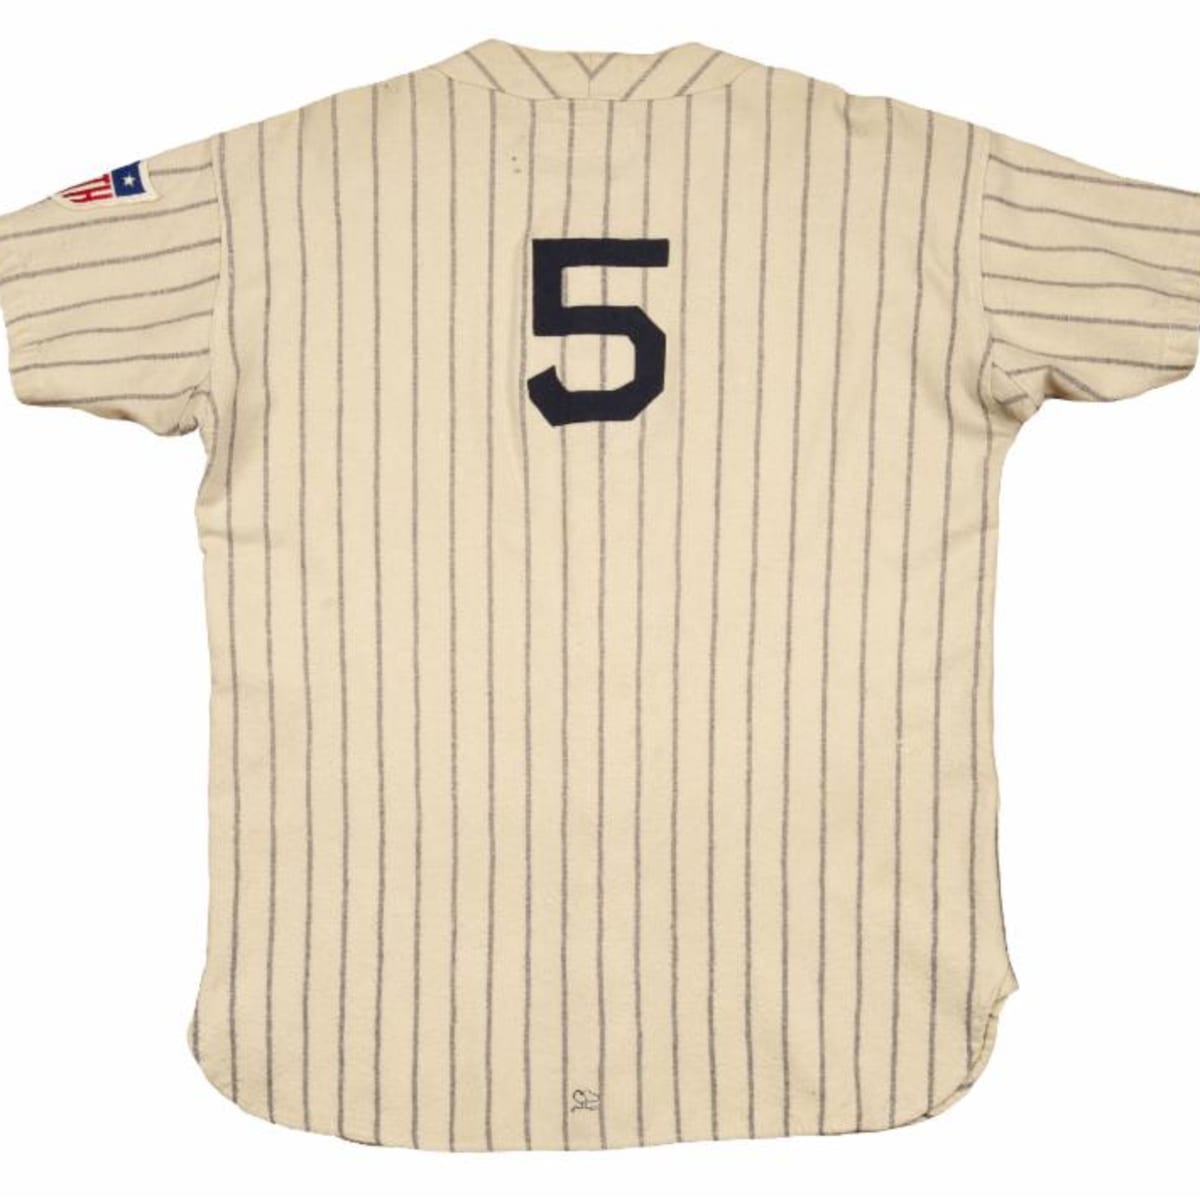 1943 STARS AND STRIPES MLB BASEBALL JERSEY SLEEVE PATCH